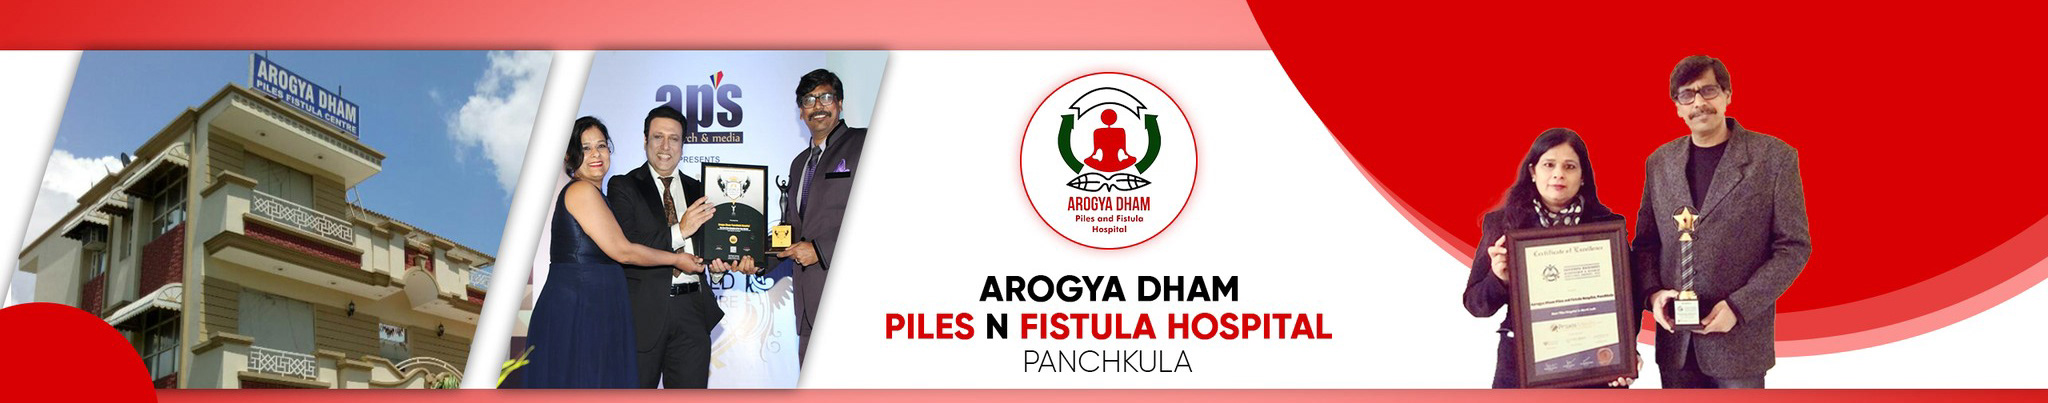 Arogya Dham Pkl's profile banner